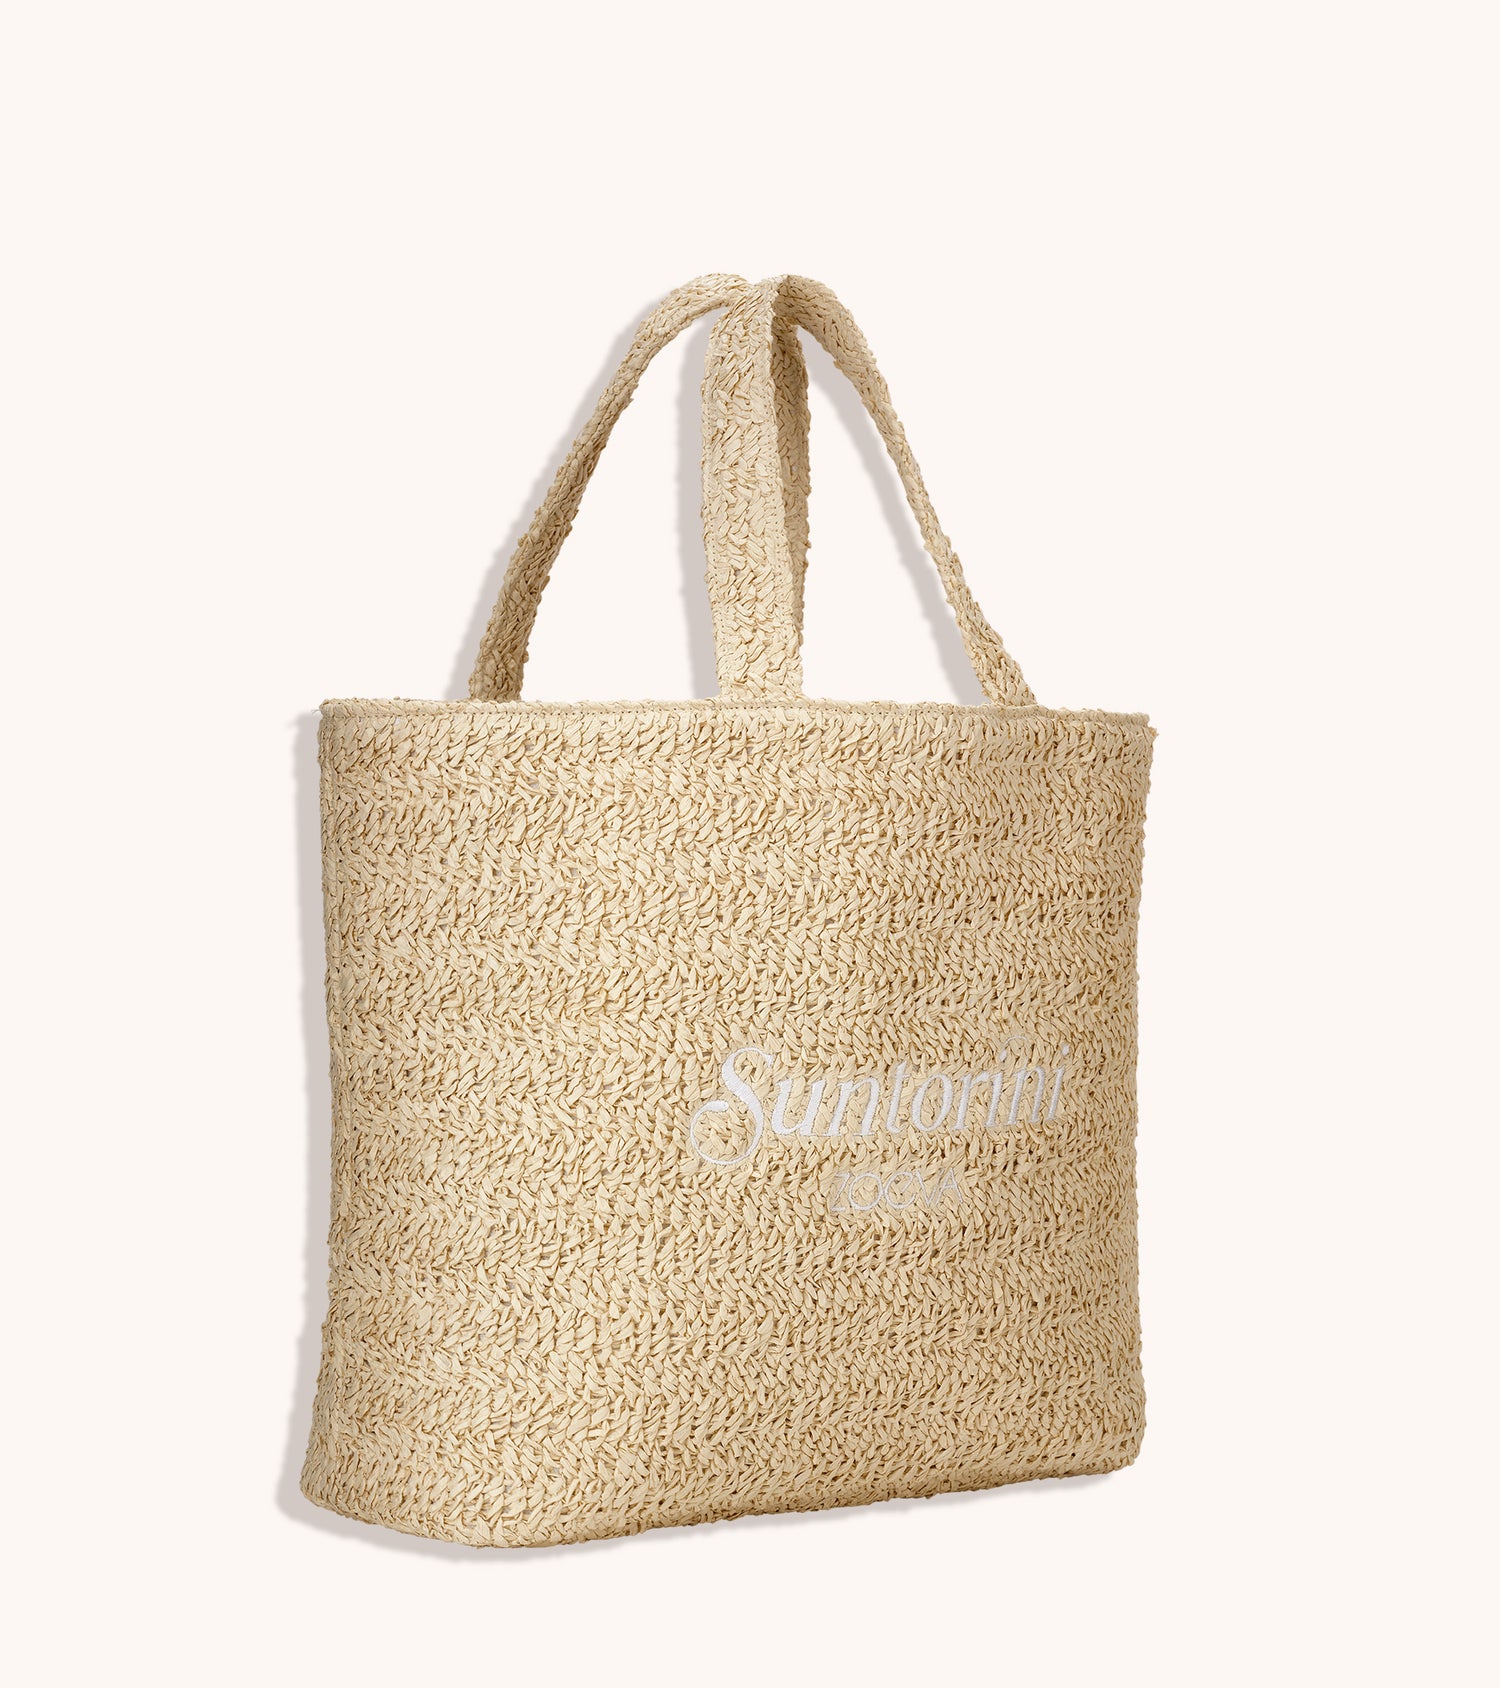 Suntorini Oversized Tote Bag Main Image featured